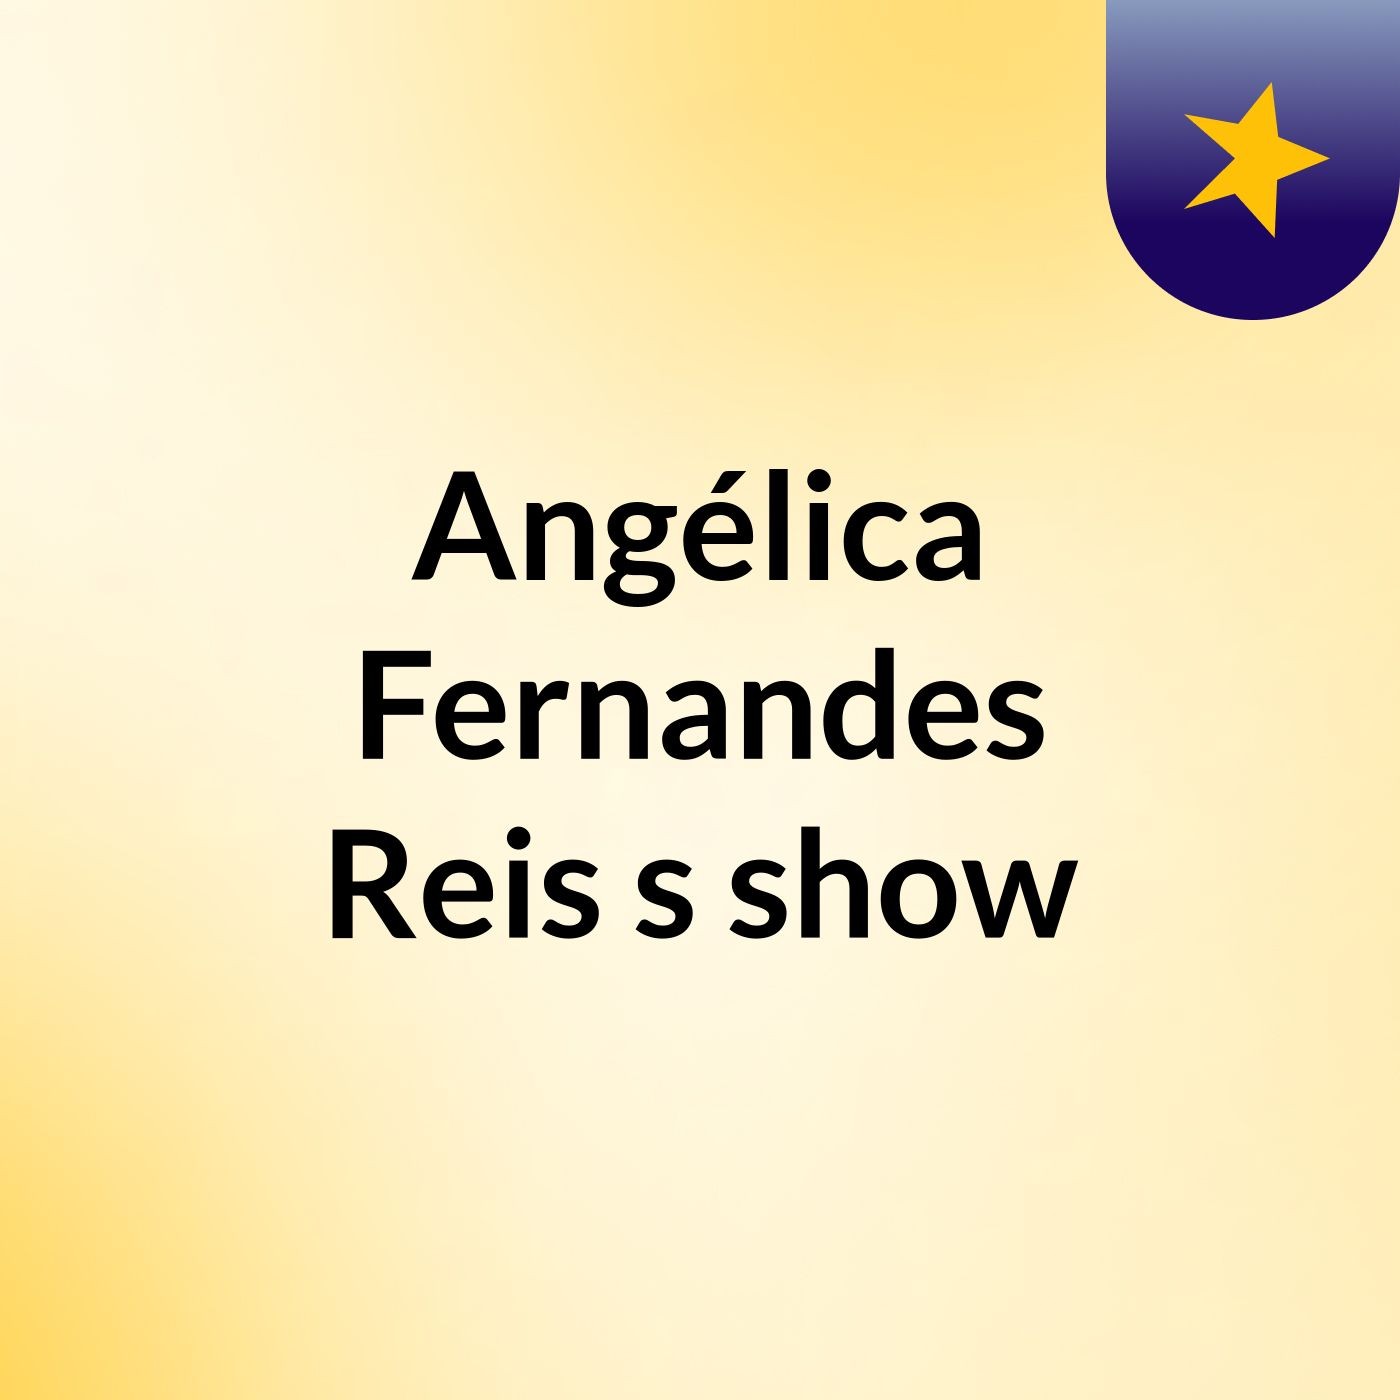 Angélica Fernandes Reis's show